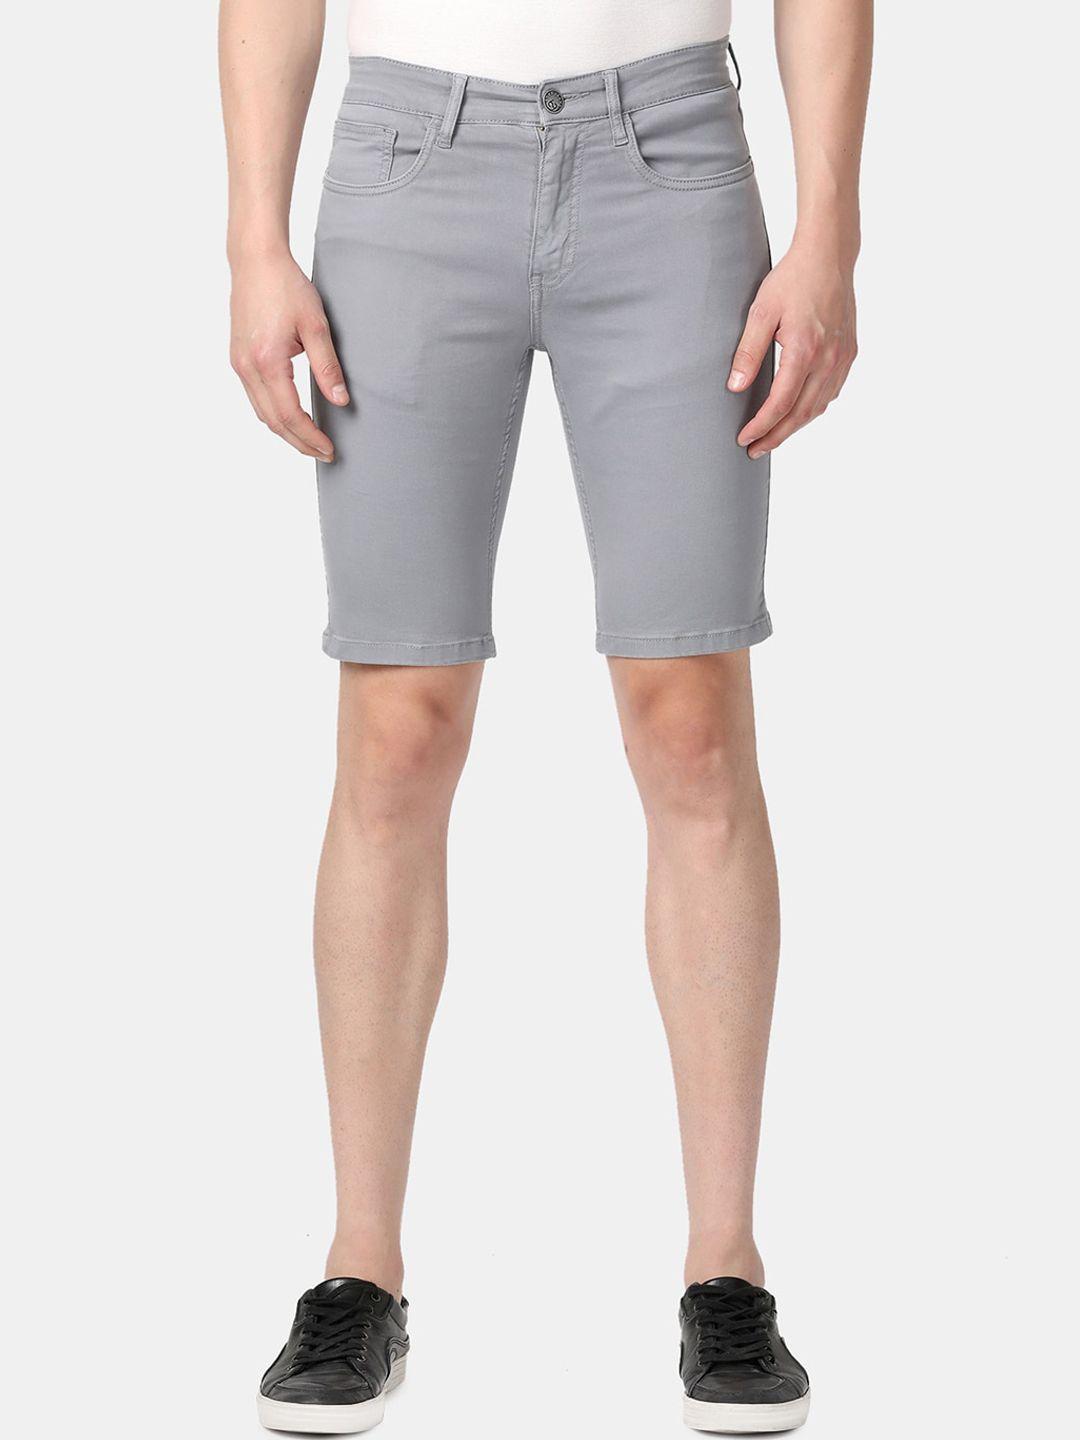 llak-jeans-men-grey-slim-fit-denim-shorts